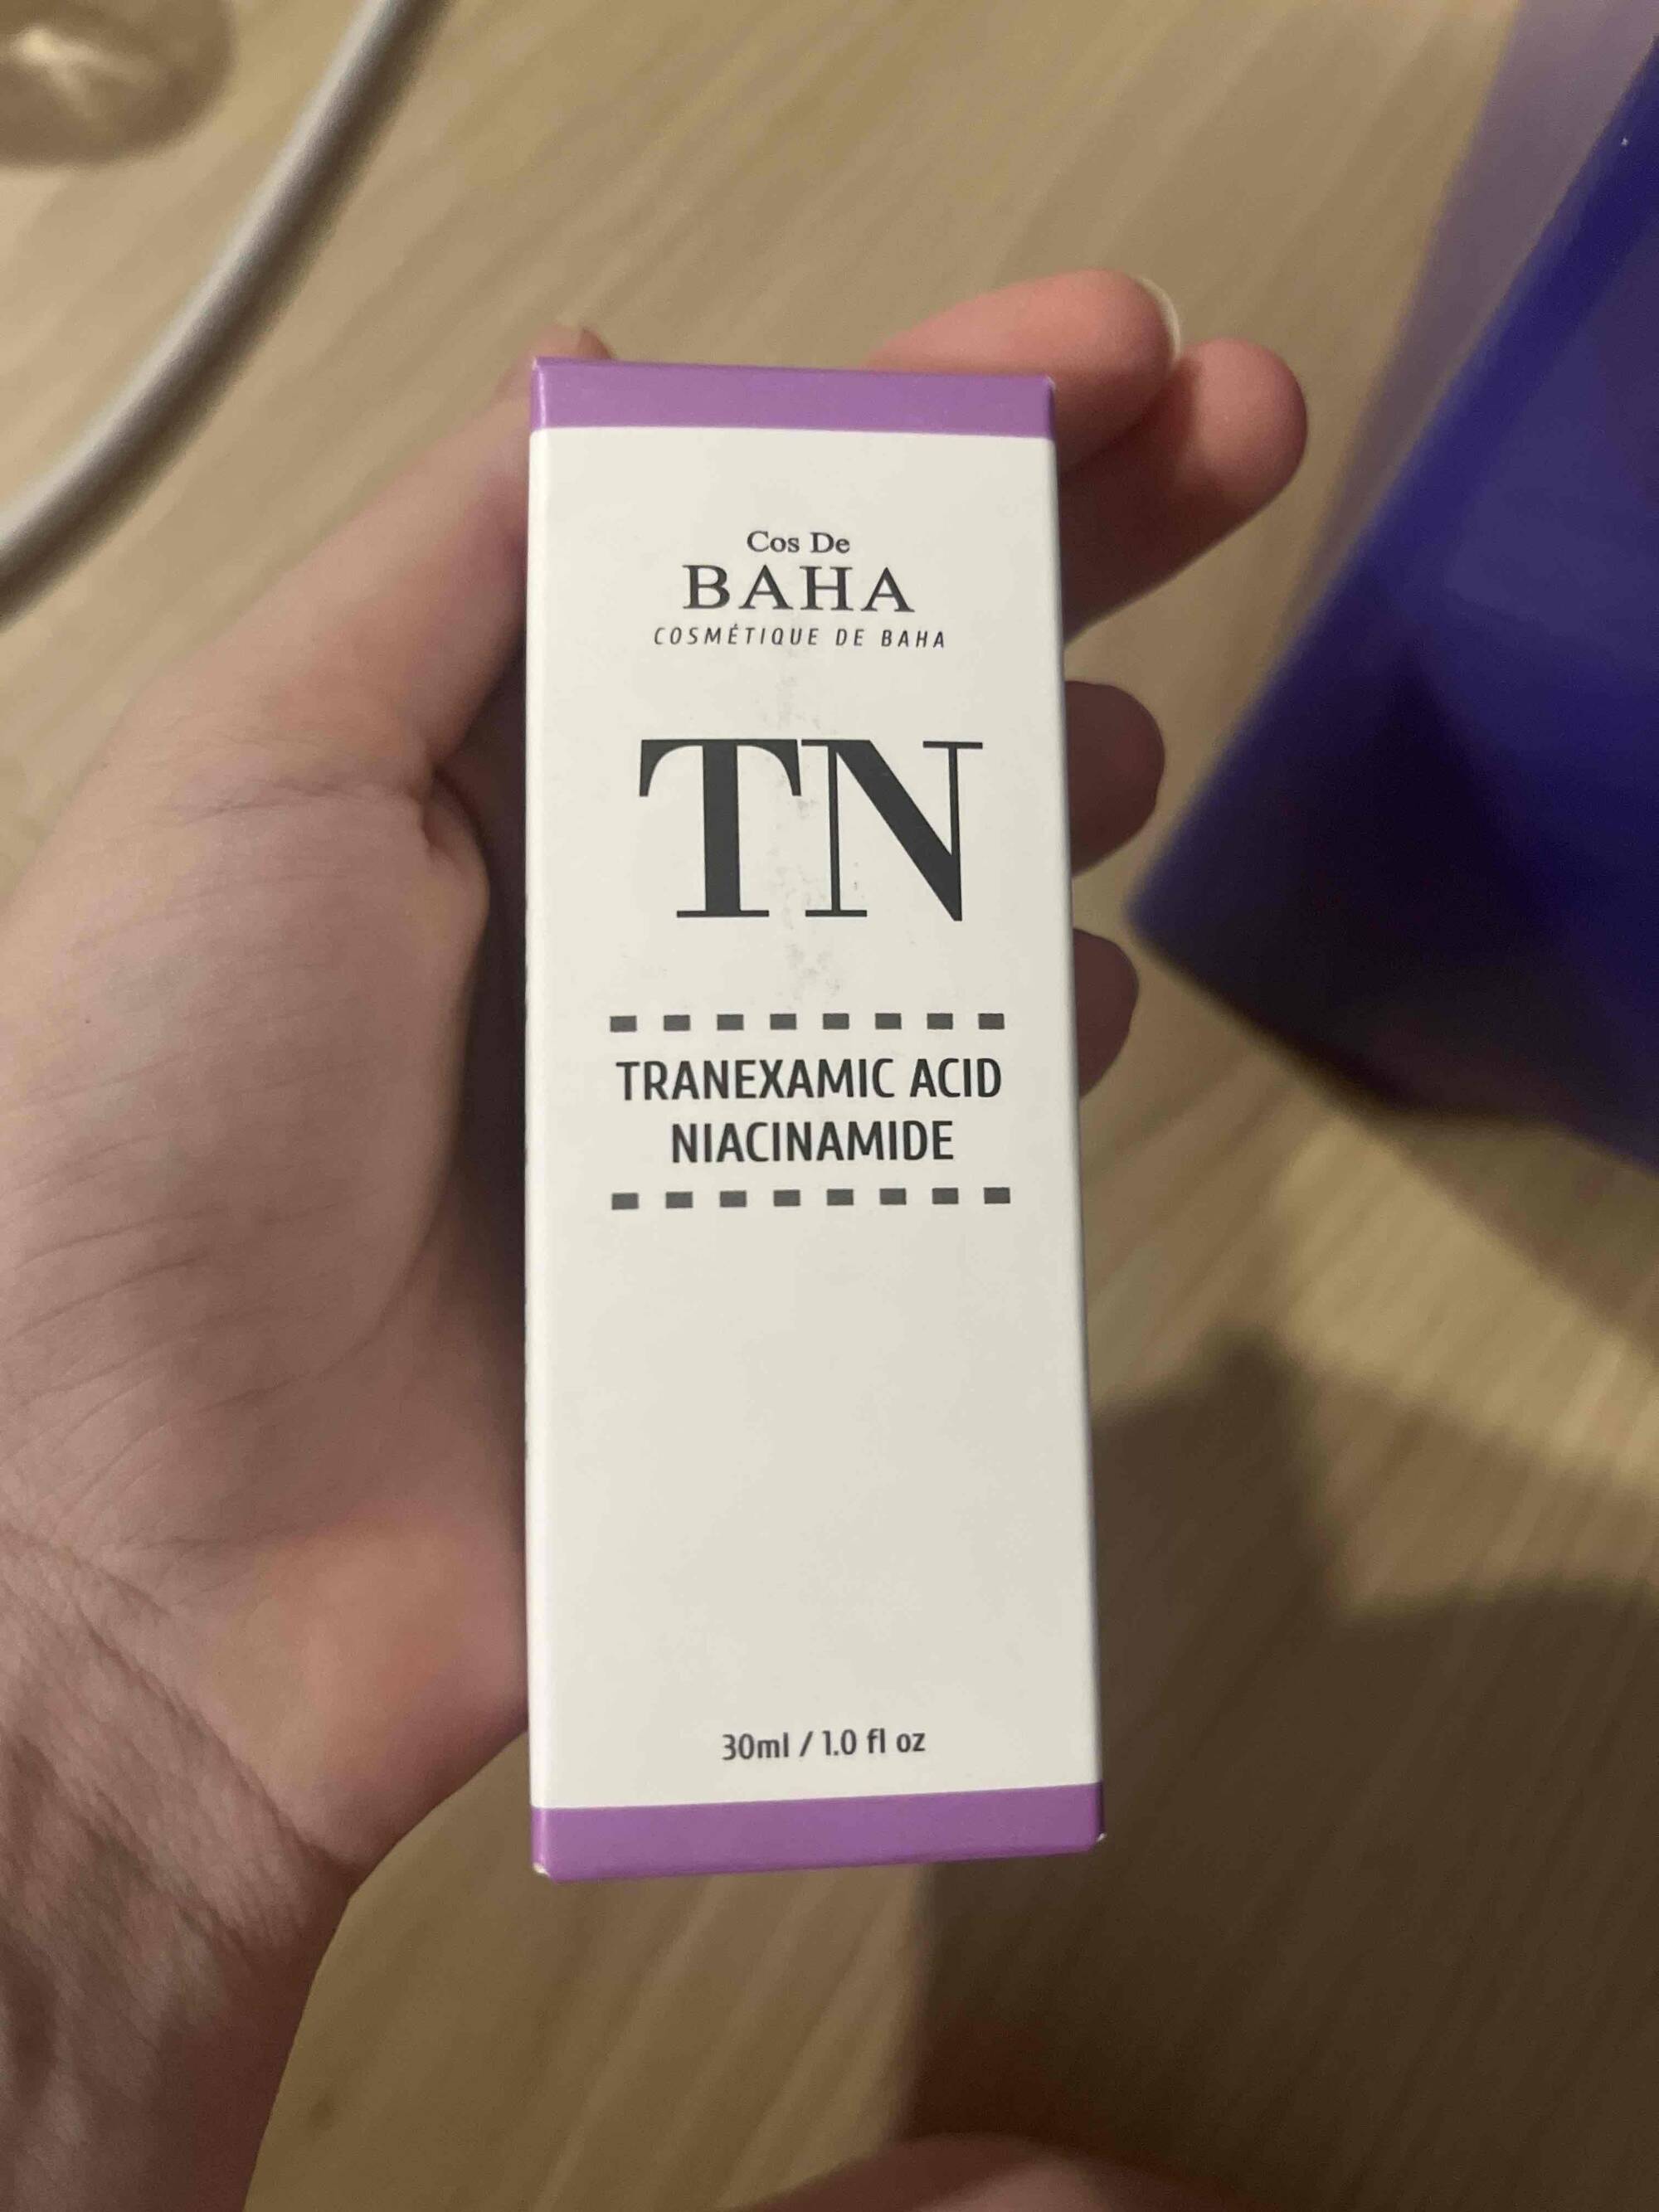 COS DE BAHA - Tranexamic acid niacinamide